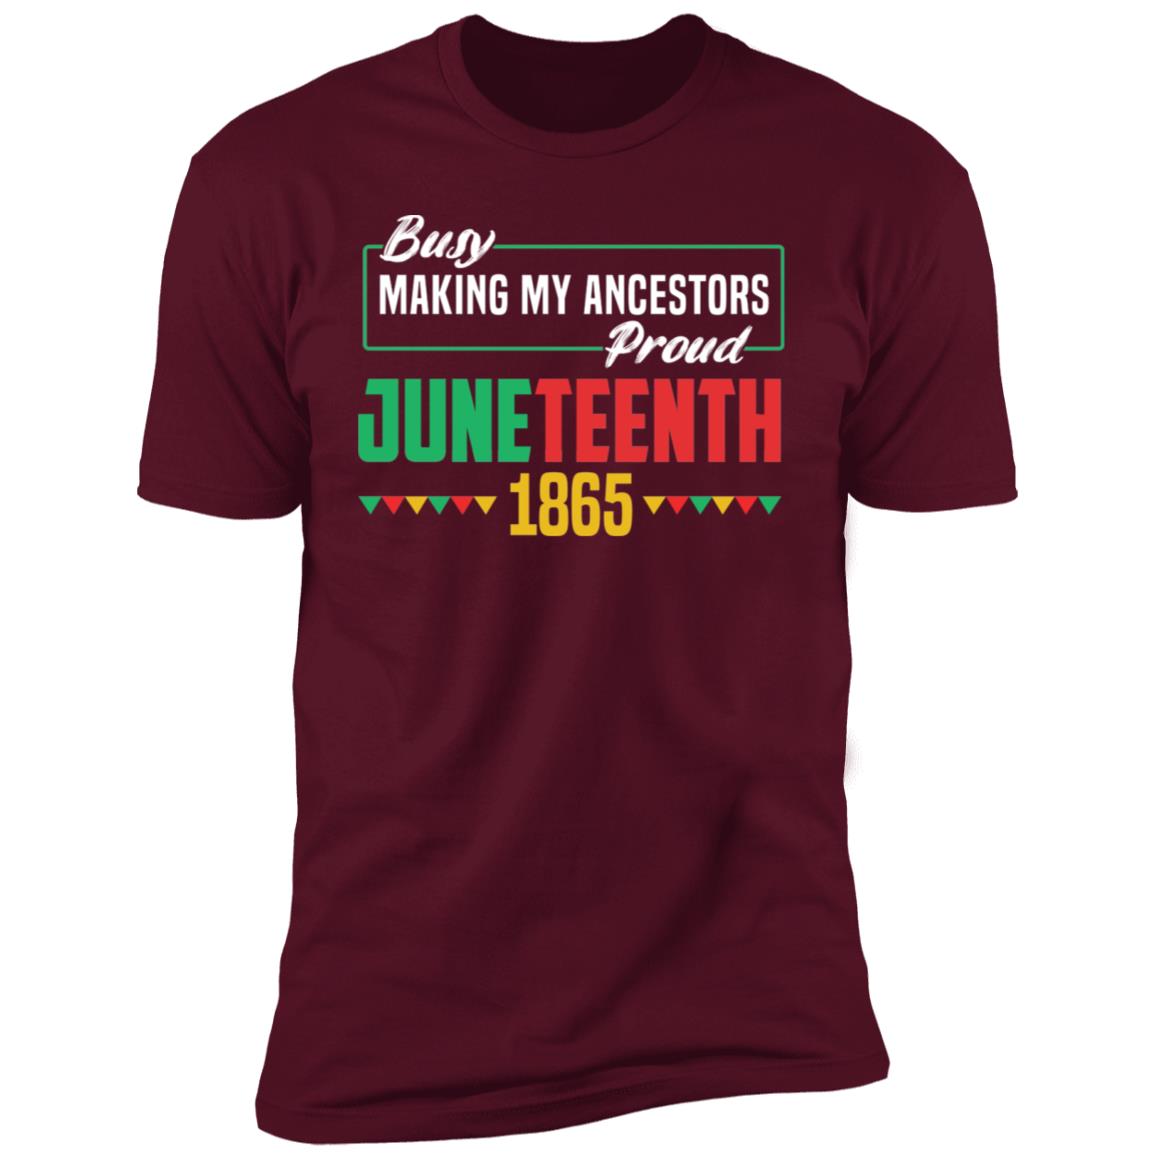 Busy Making My Ancestors Proud - Juneteenth T-shirt Apparel Gearment Premium T-Shirt Maroon S